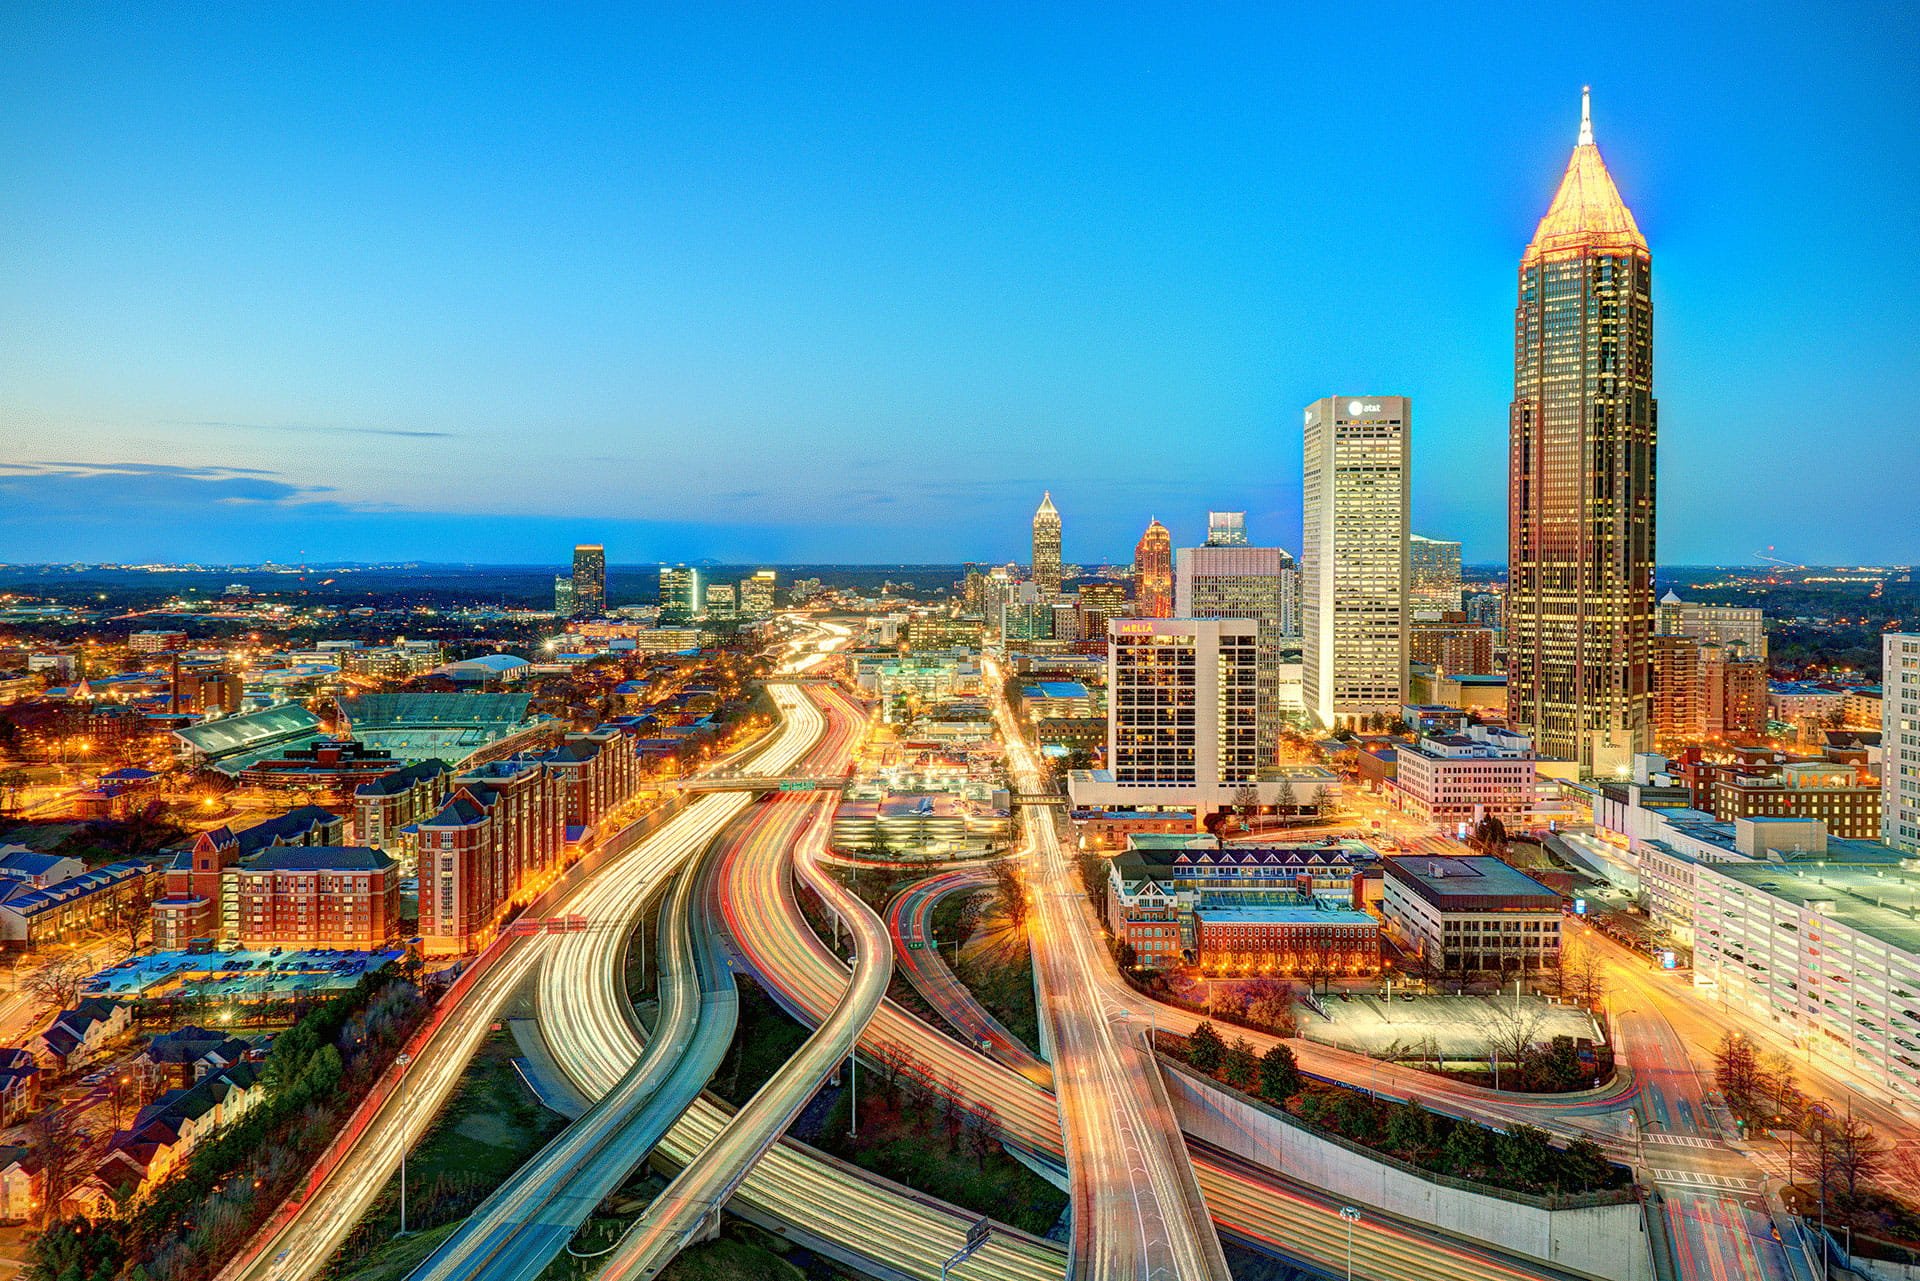 Atlanta City Background